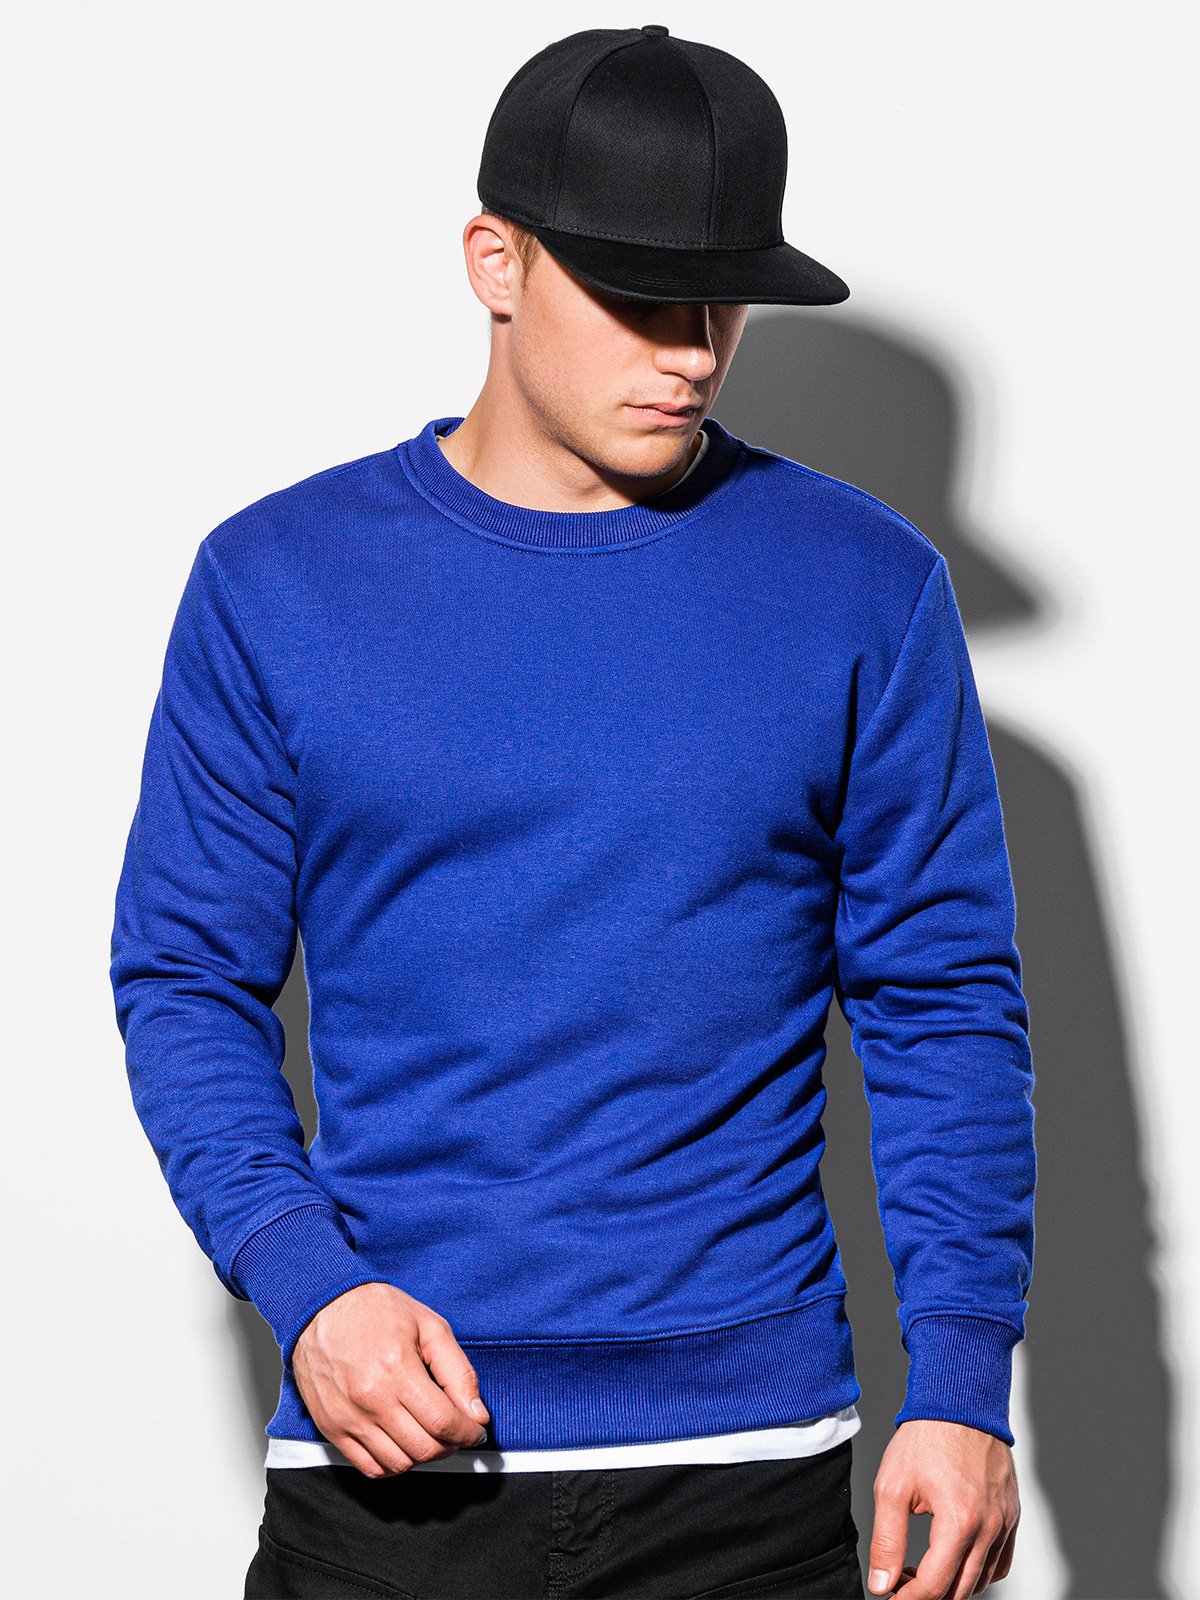 Niuer Men Leisure Solid Color Hoodies Mens Casual Sweatshirt Drawstring Winter Long Sleeve Plain Pullover Haze Blue 2XL, Men's, Black